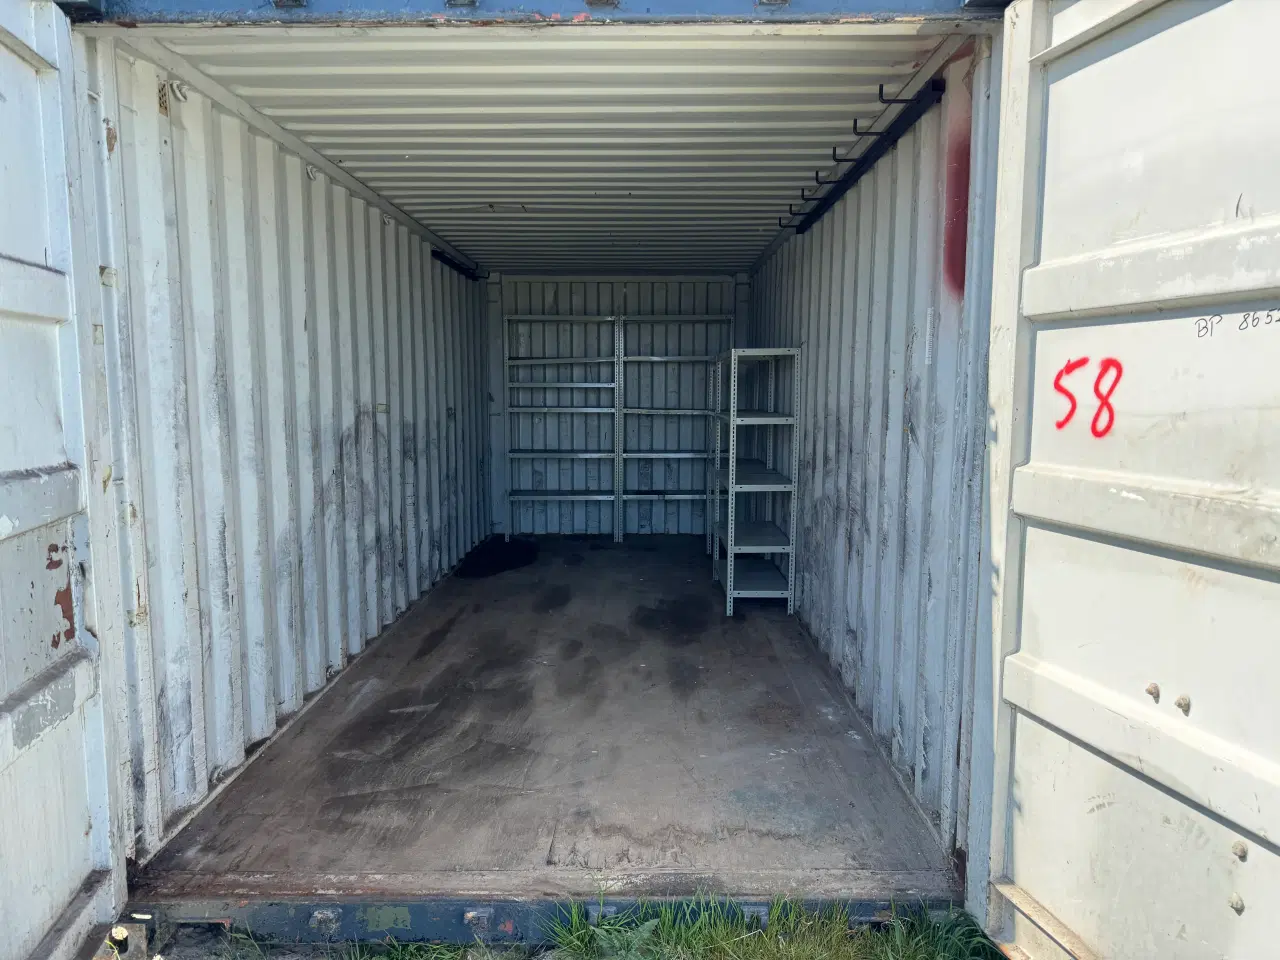 Billede 1 - 20 fods container